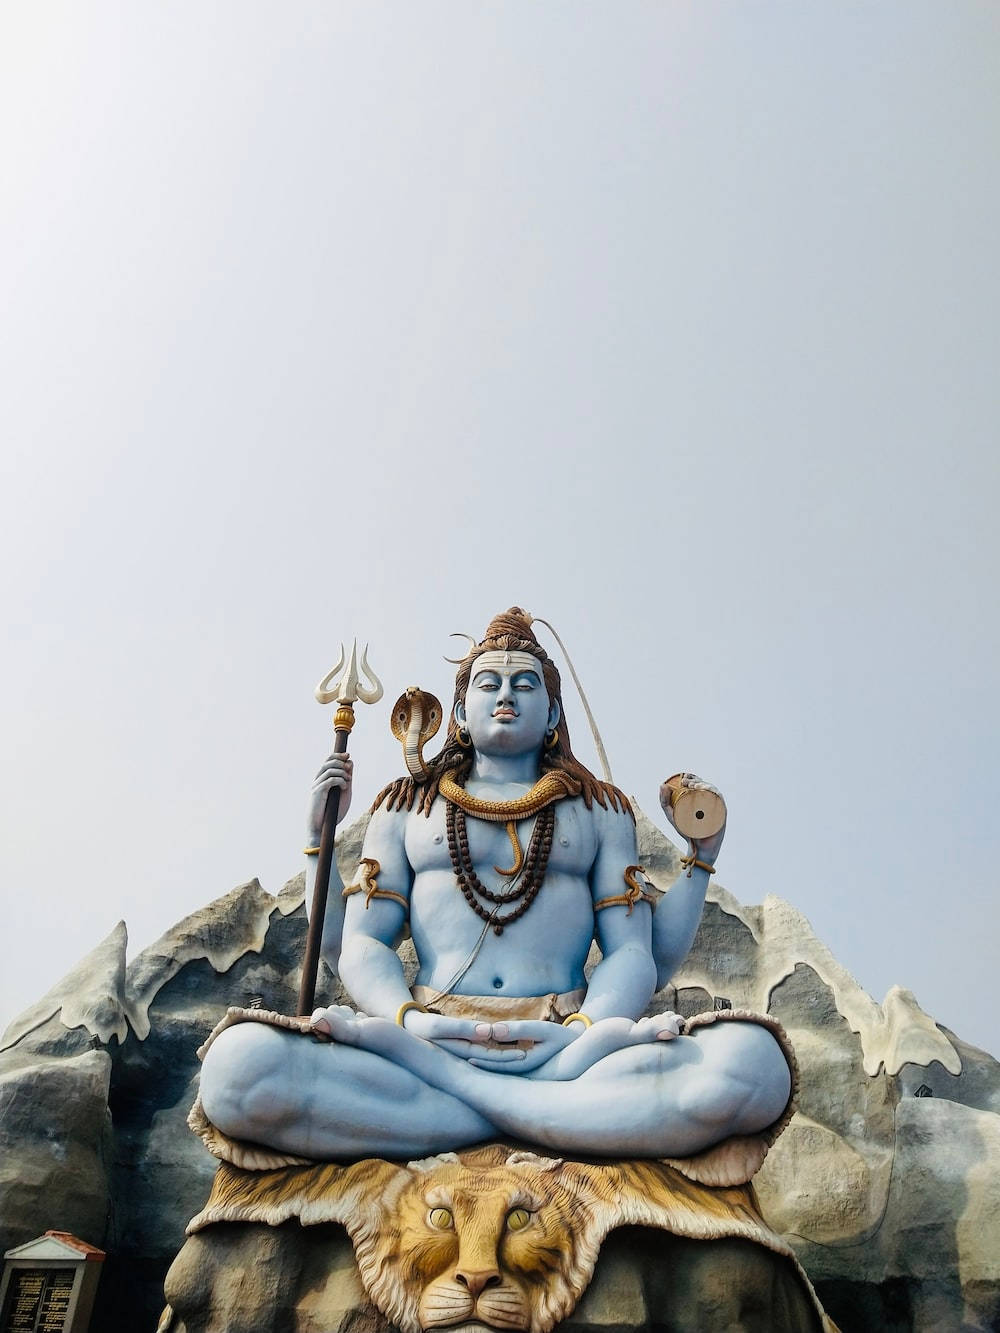 Hd View Of Giant Mahadev Statue